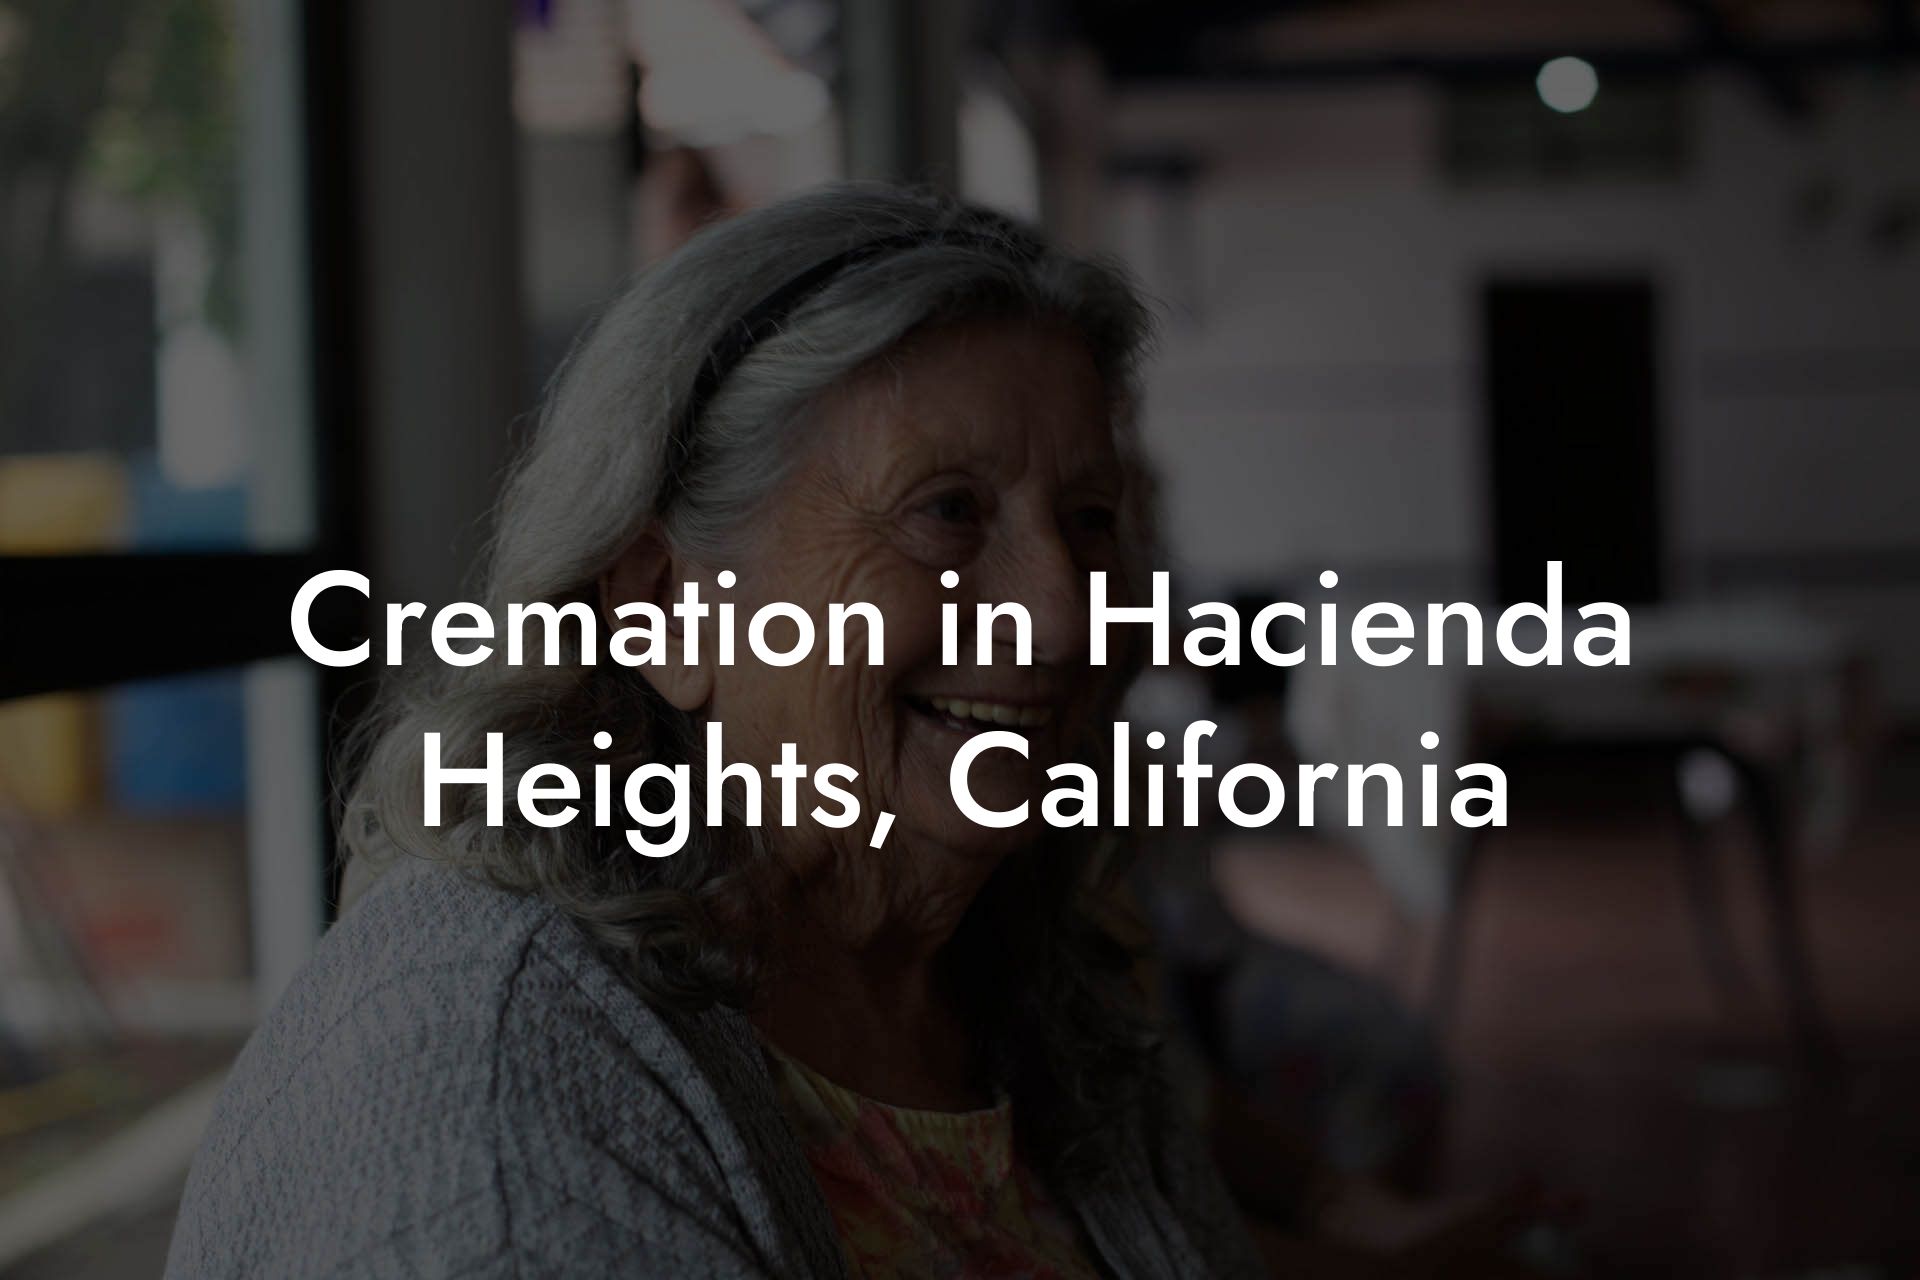 Cremation in Hacienda Heights, California